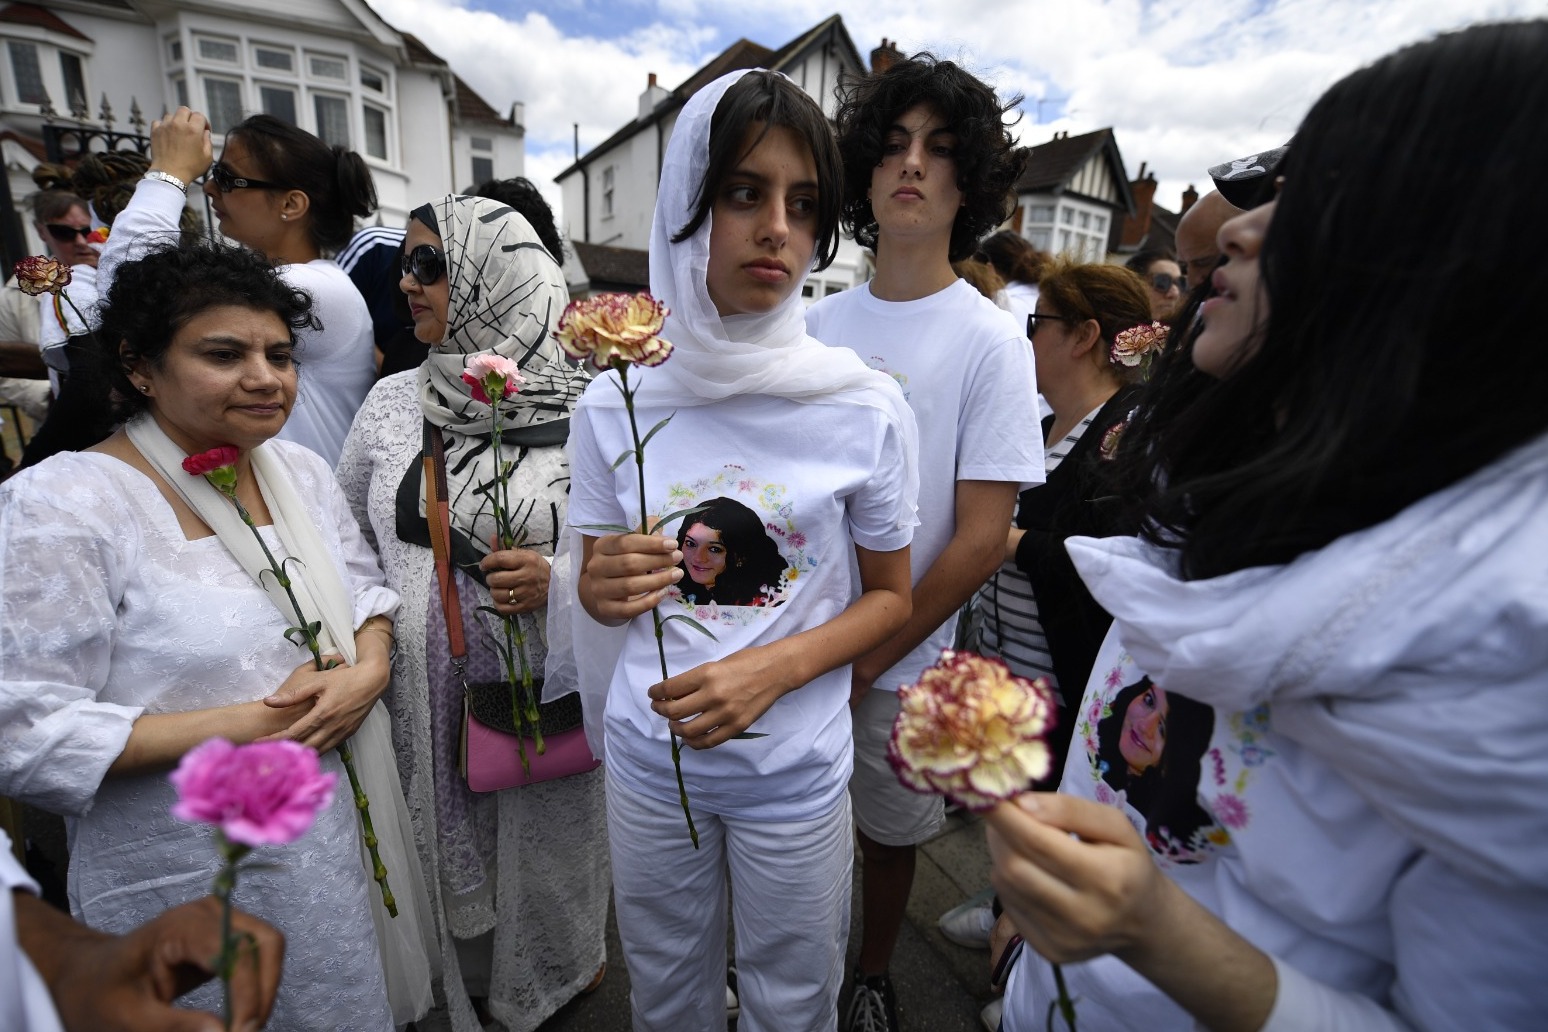 Hundreds gather at vigil for Londoner Zara Aleena 